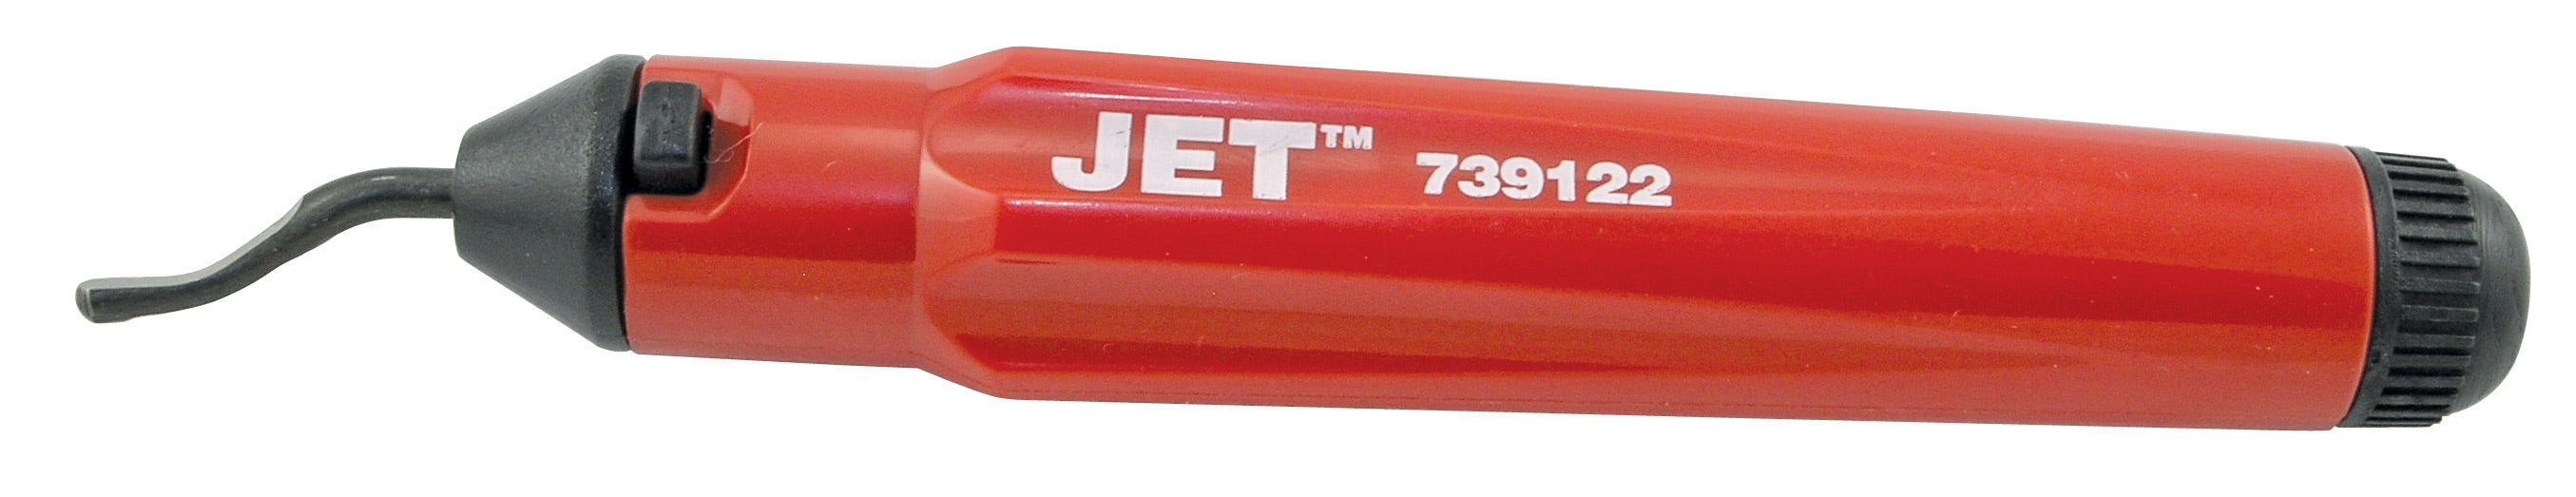 Deburring Tools Jet JDT-100 6 Inch Deburring Tool